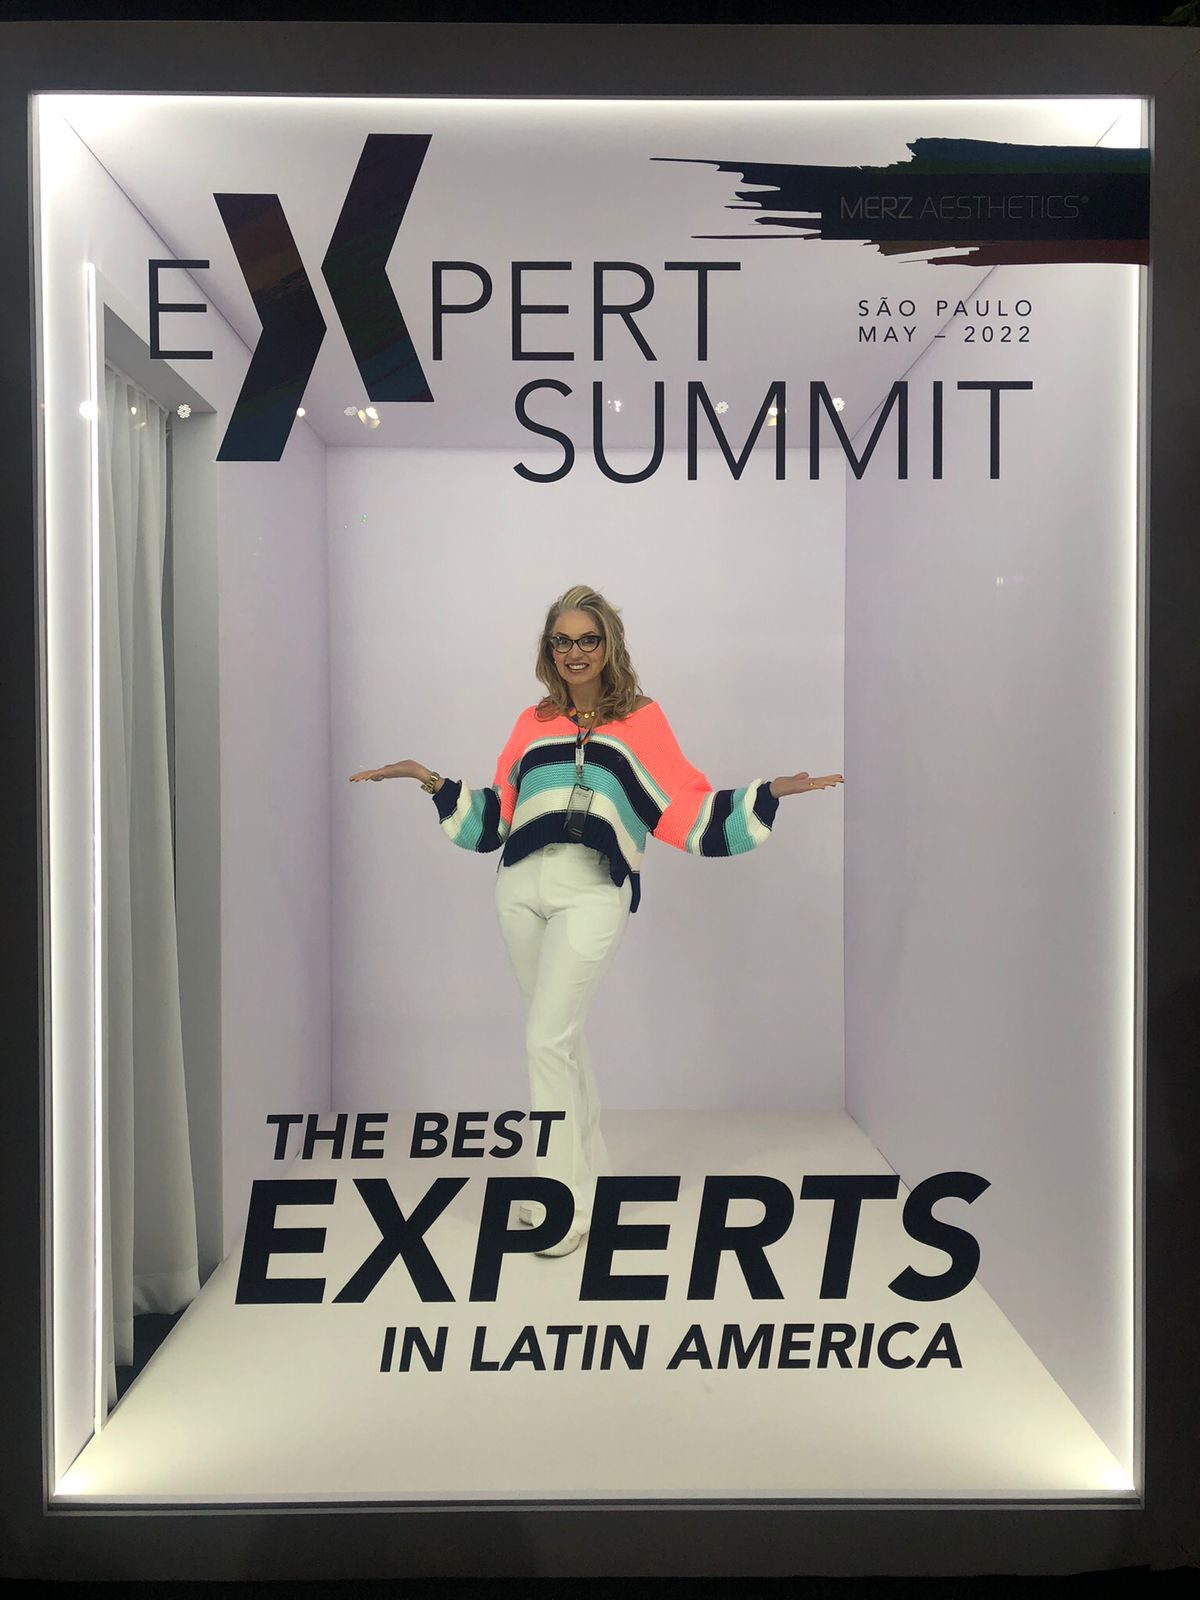 7º Latin American Merz Aesthetics, o Expert Summit,